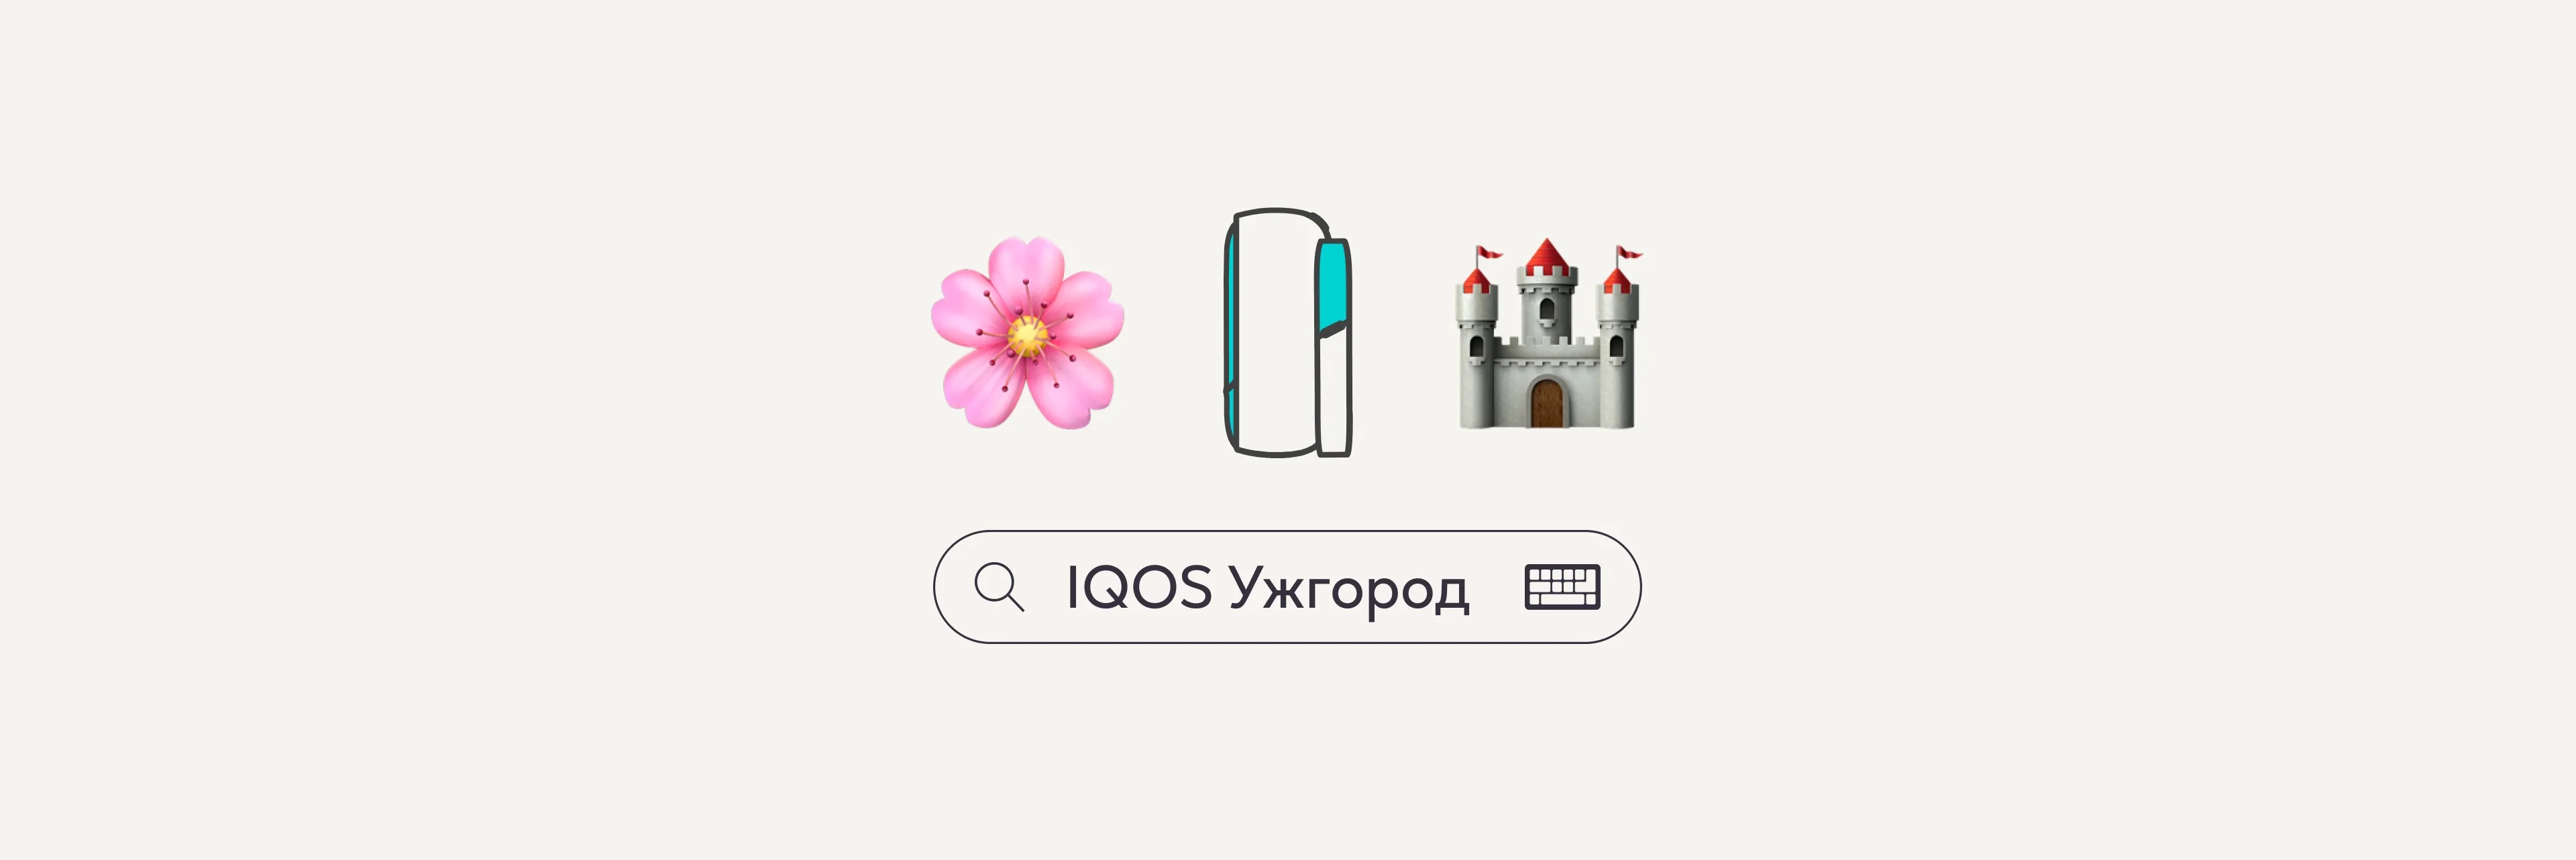 uzhgorod-now-has-iqos-space